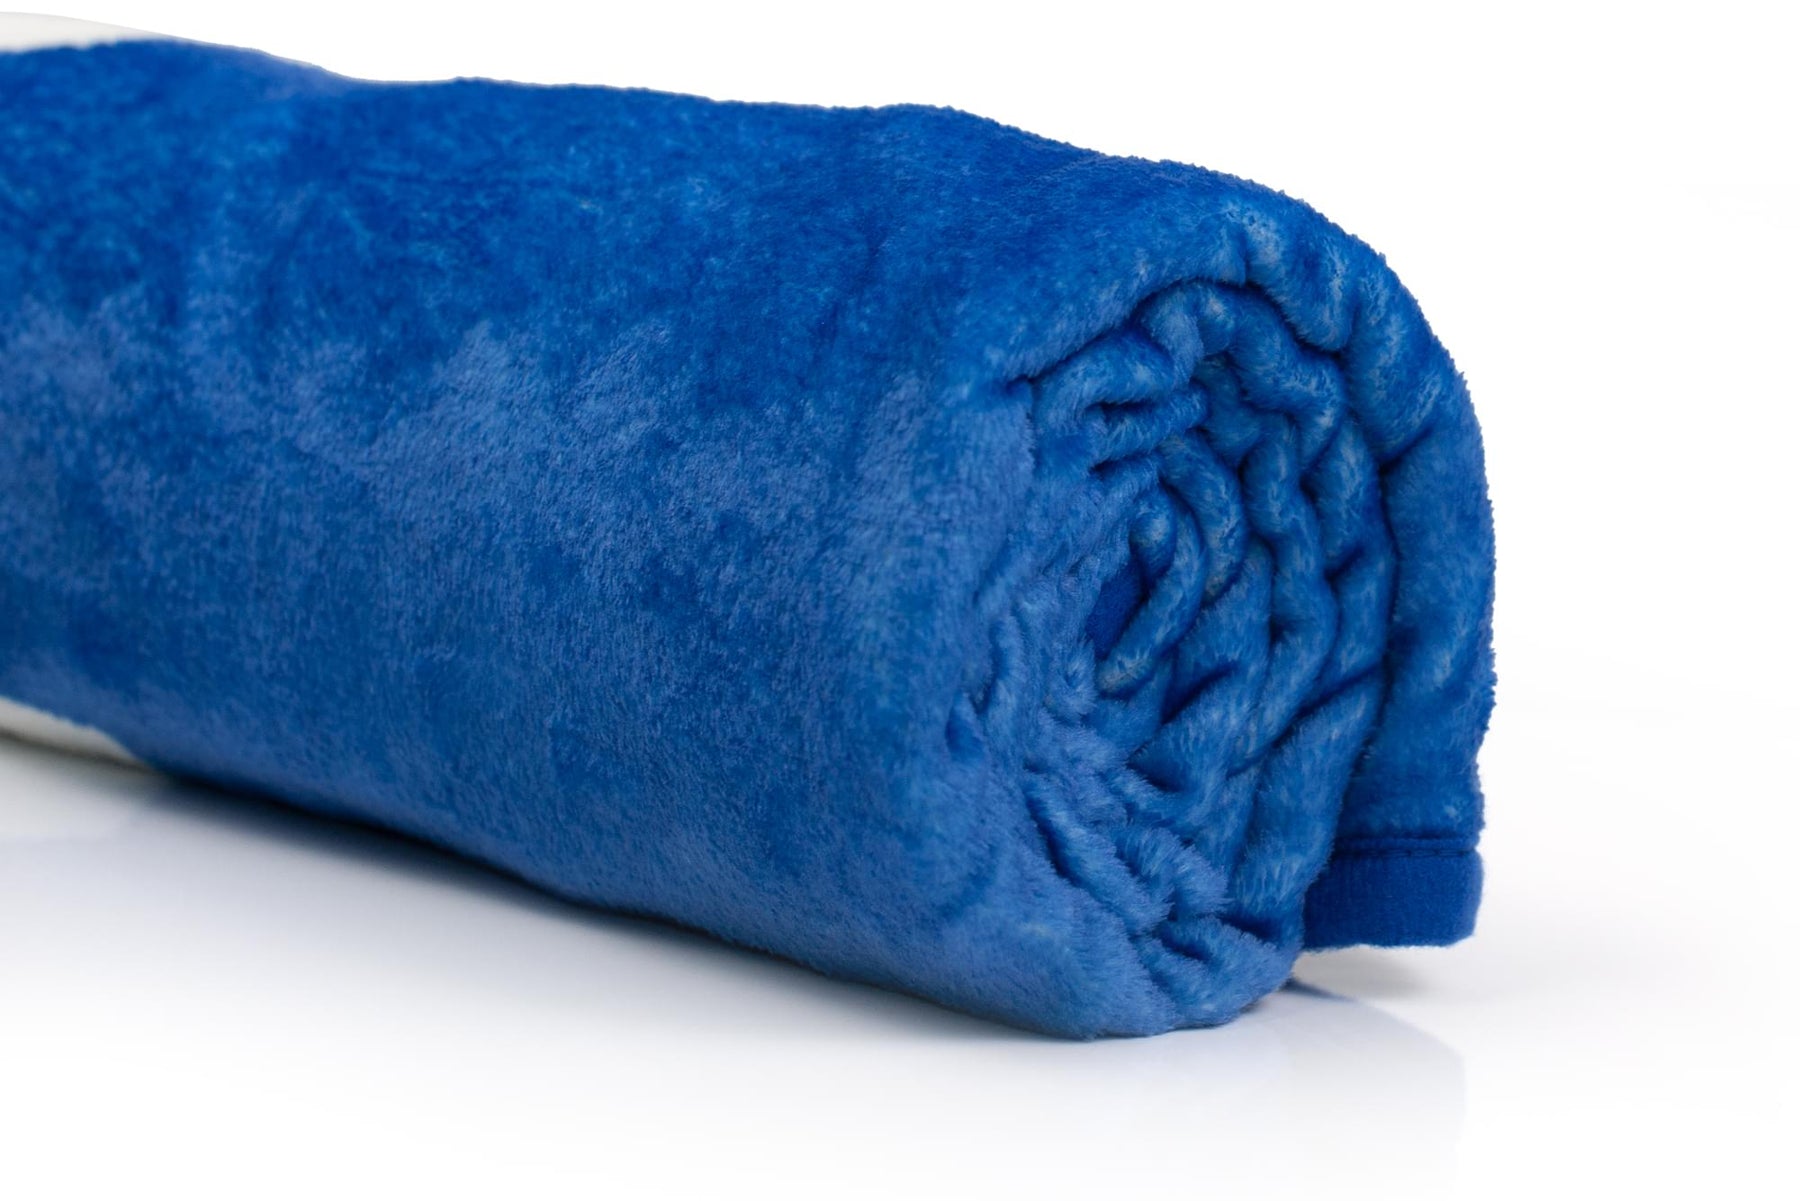 NASA Logo Fleece Soft Throw Blanket | Large NASA Blanket | 60 x 45 Inches